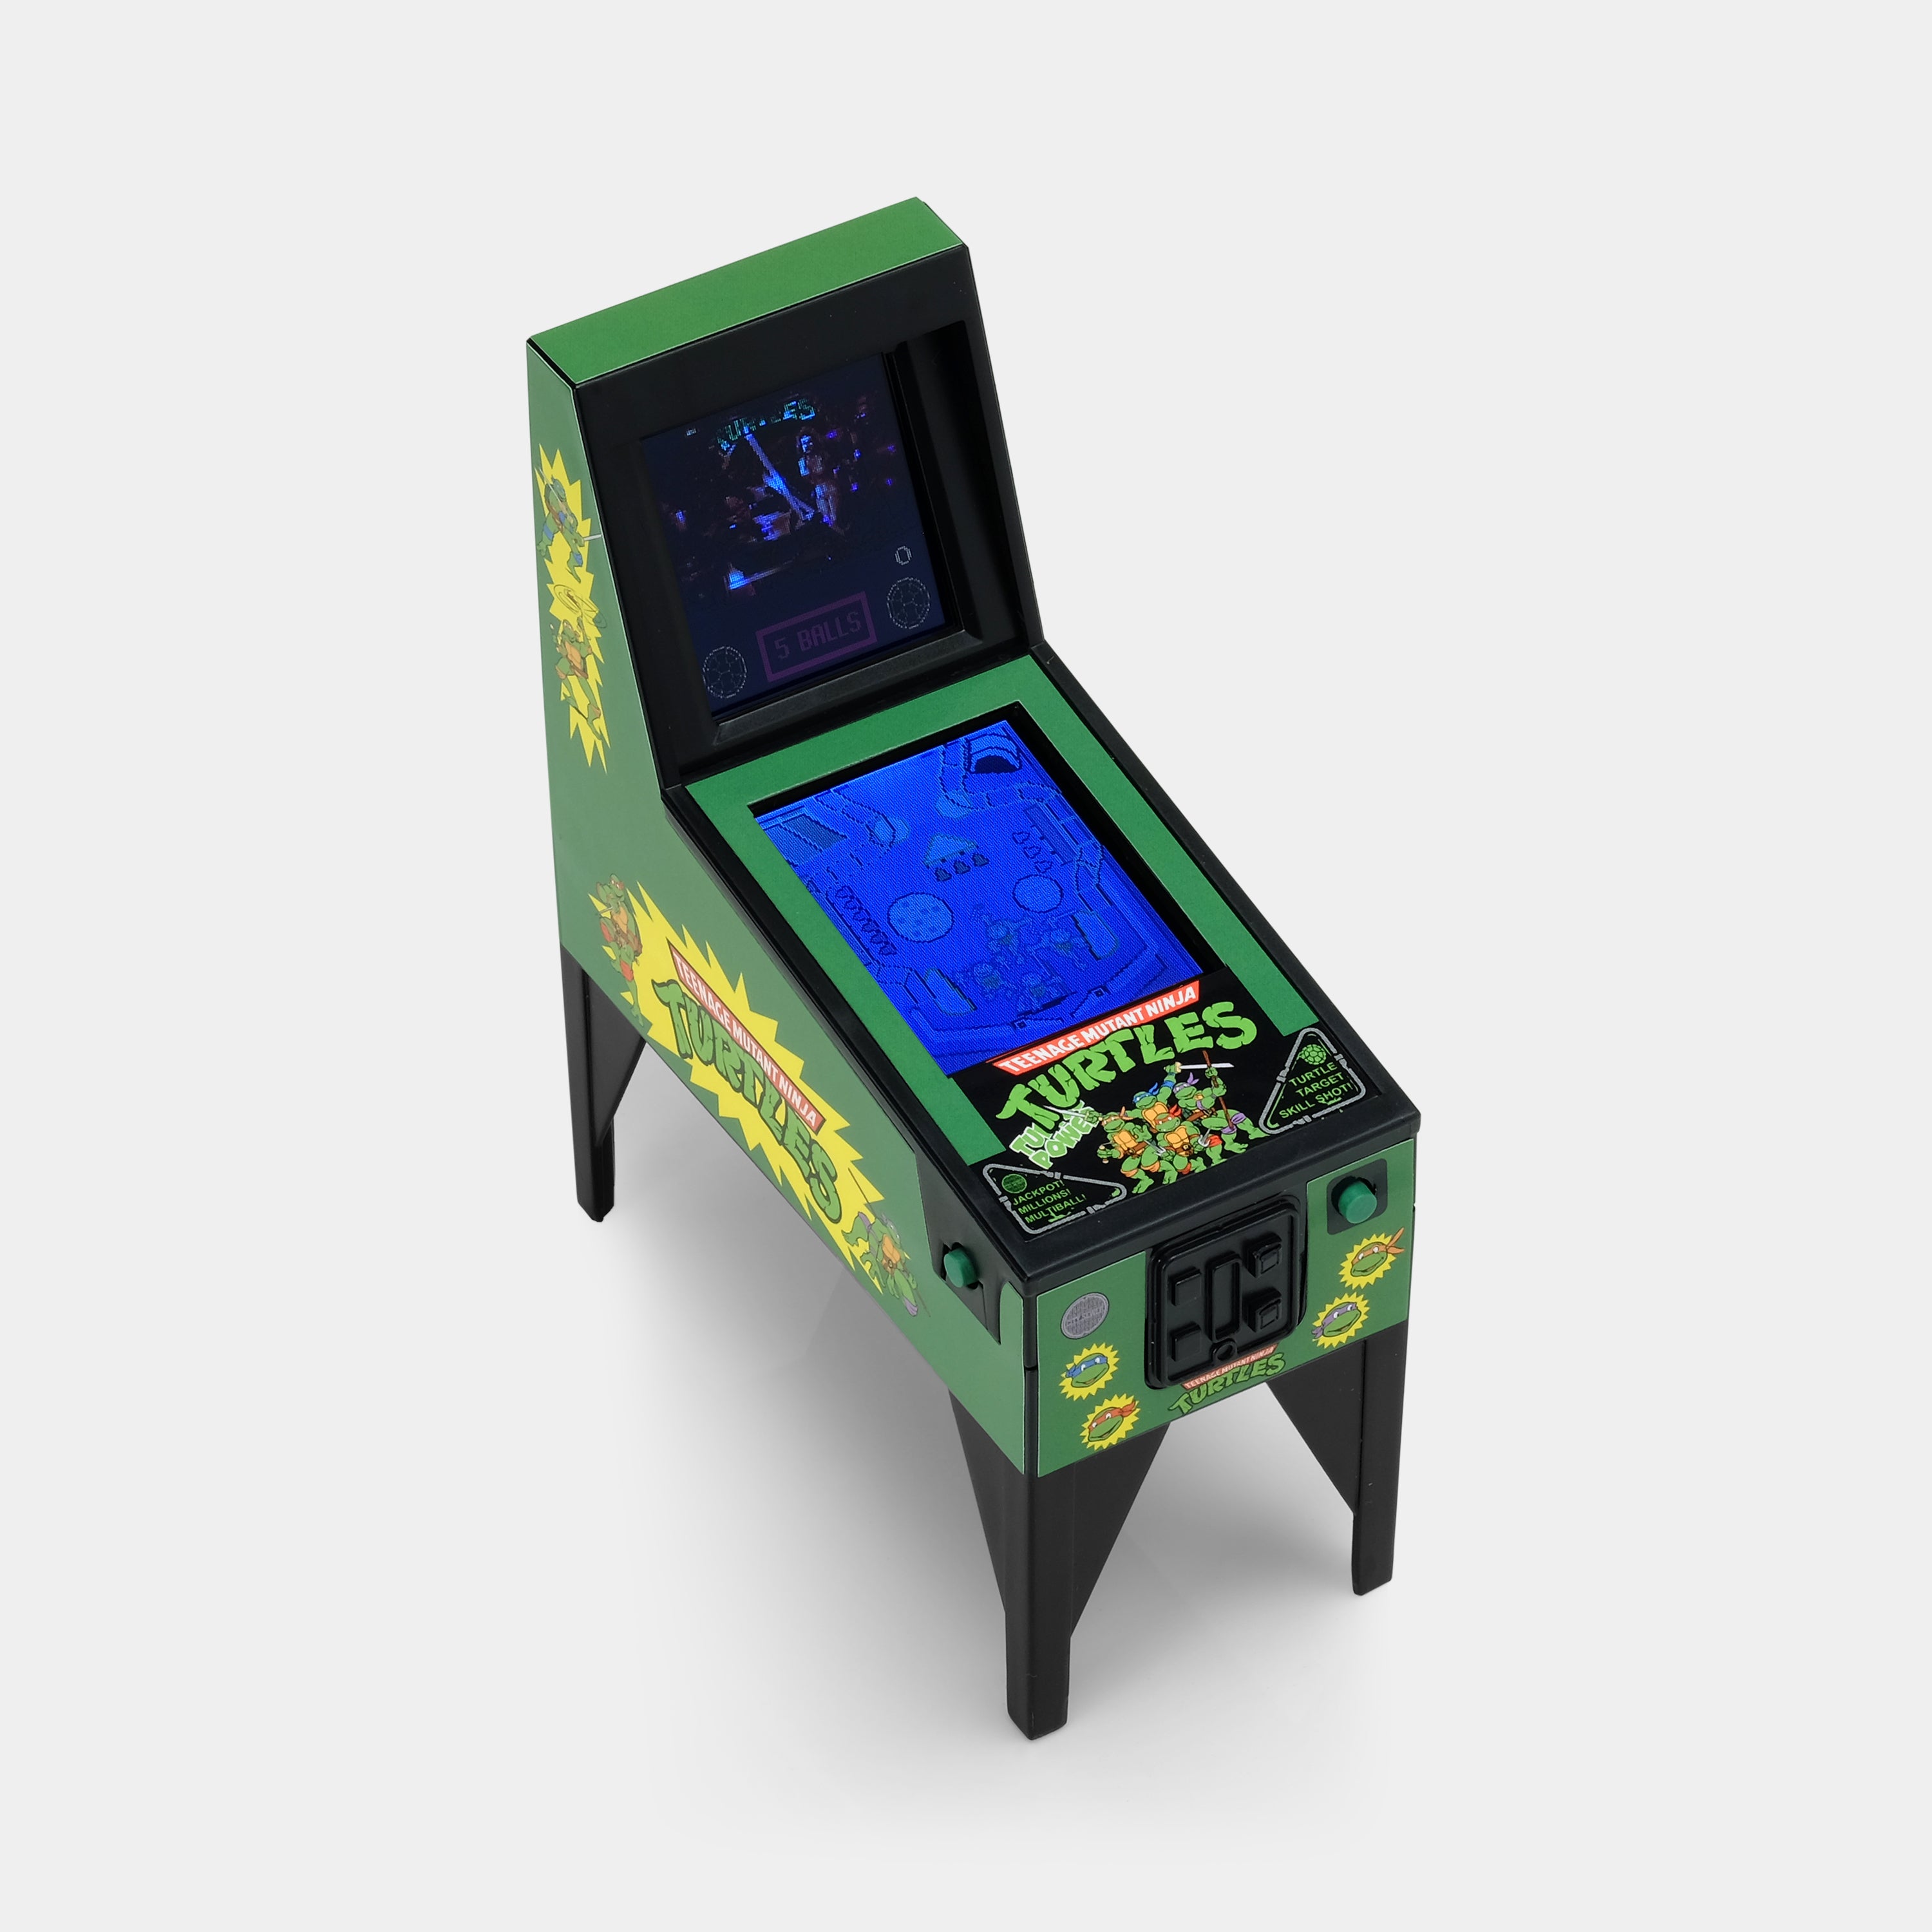 Boardwalk Arcade Teenage Mutant Ninja Turtle Electronic Pinball Game